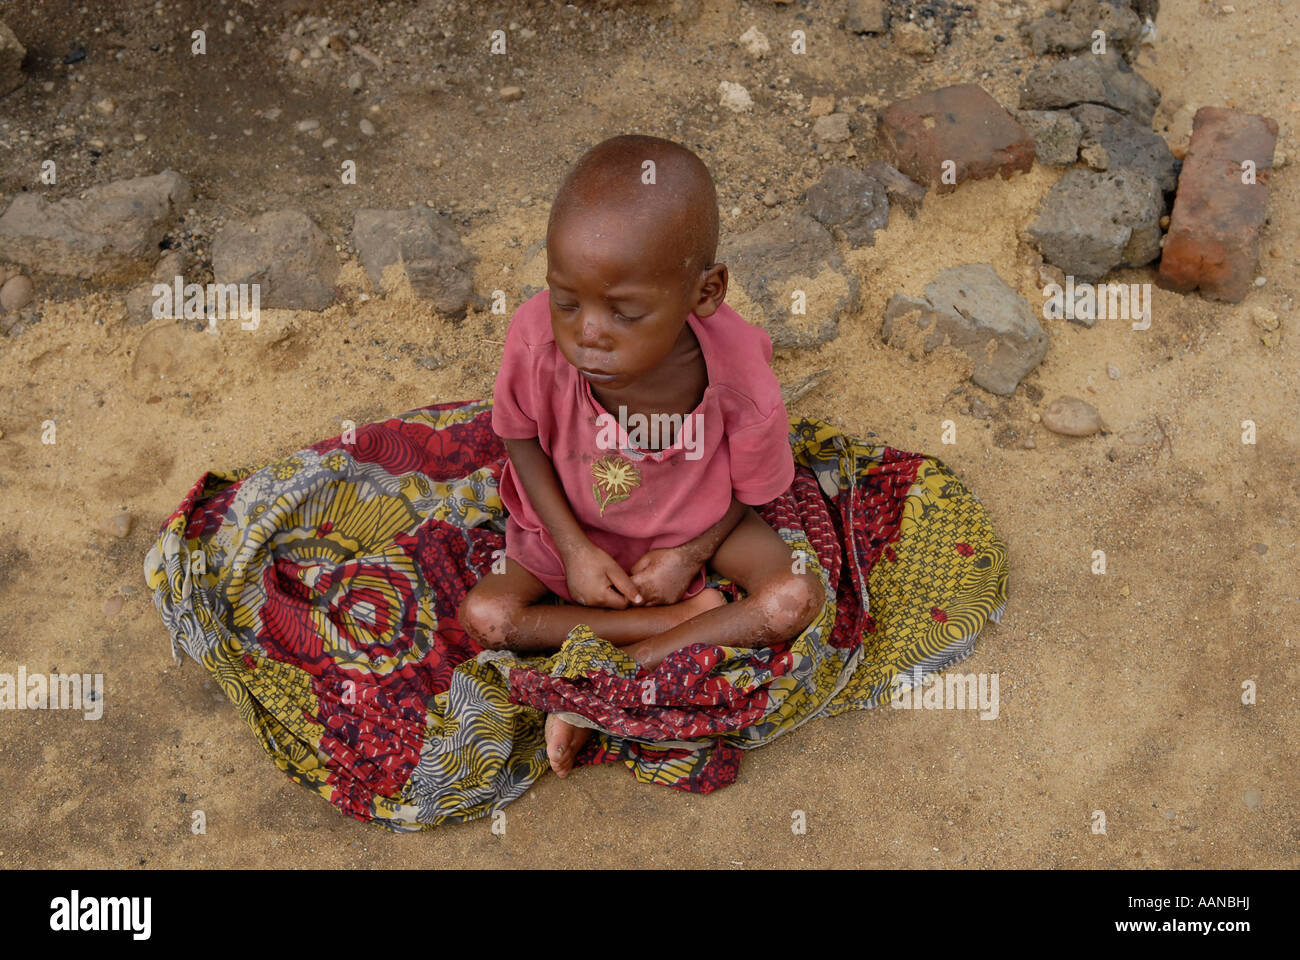 A malnourished child in North Kivu province in eastern Democratic Republic of Congo Africa Stock Photo